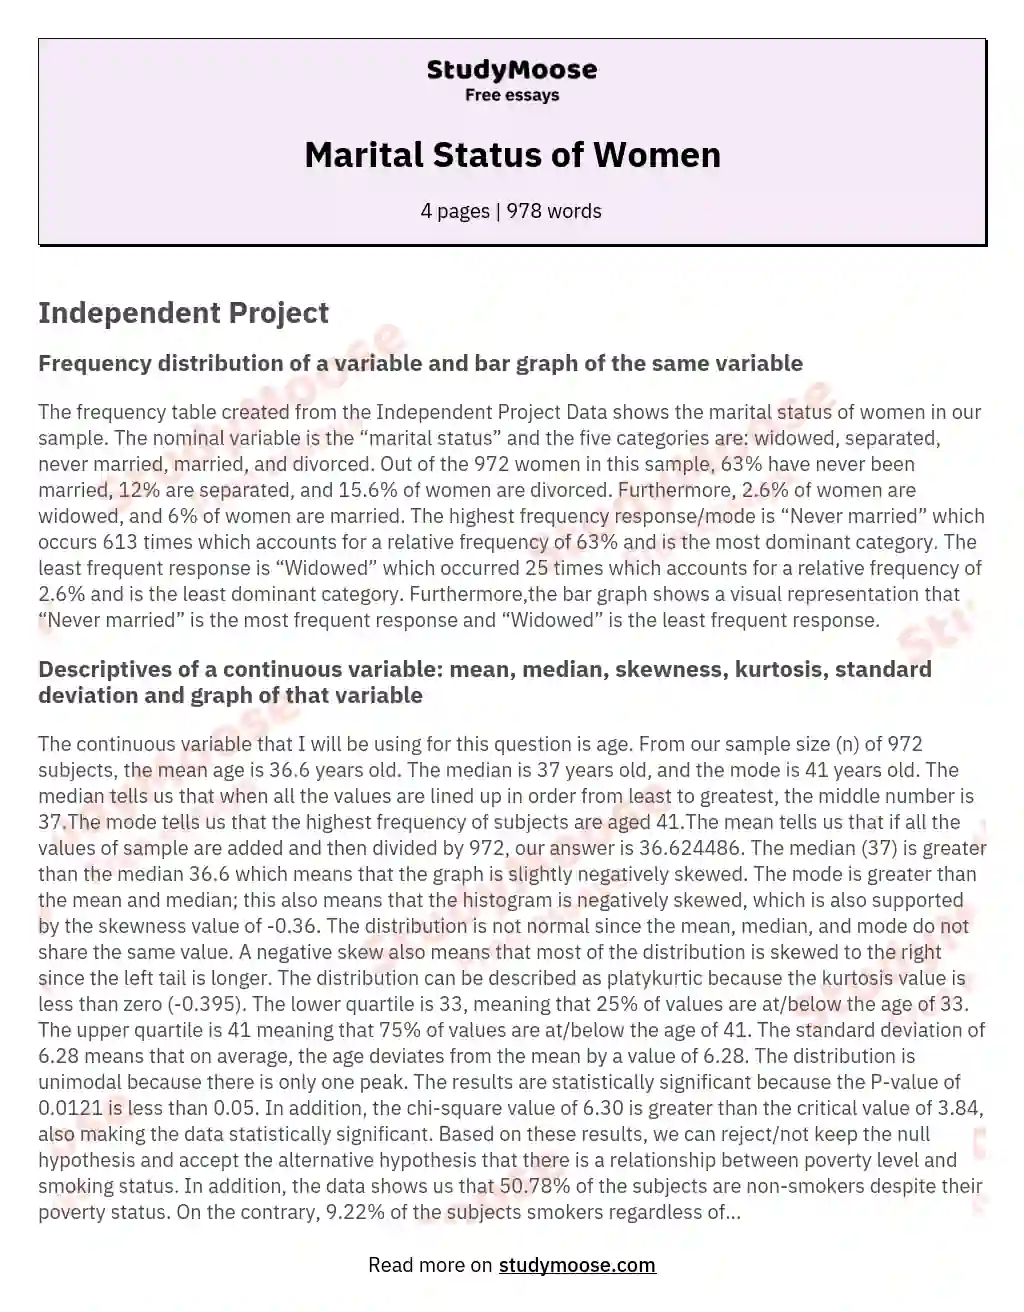 Marital Status of Women essay